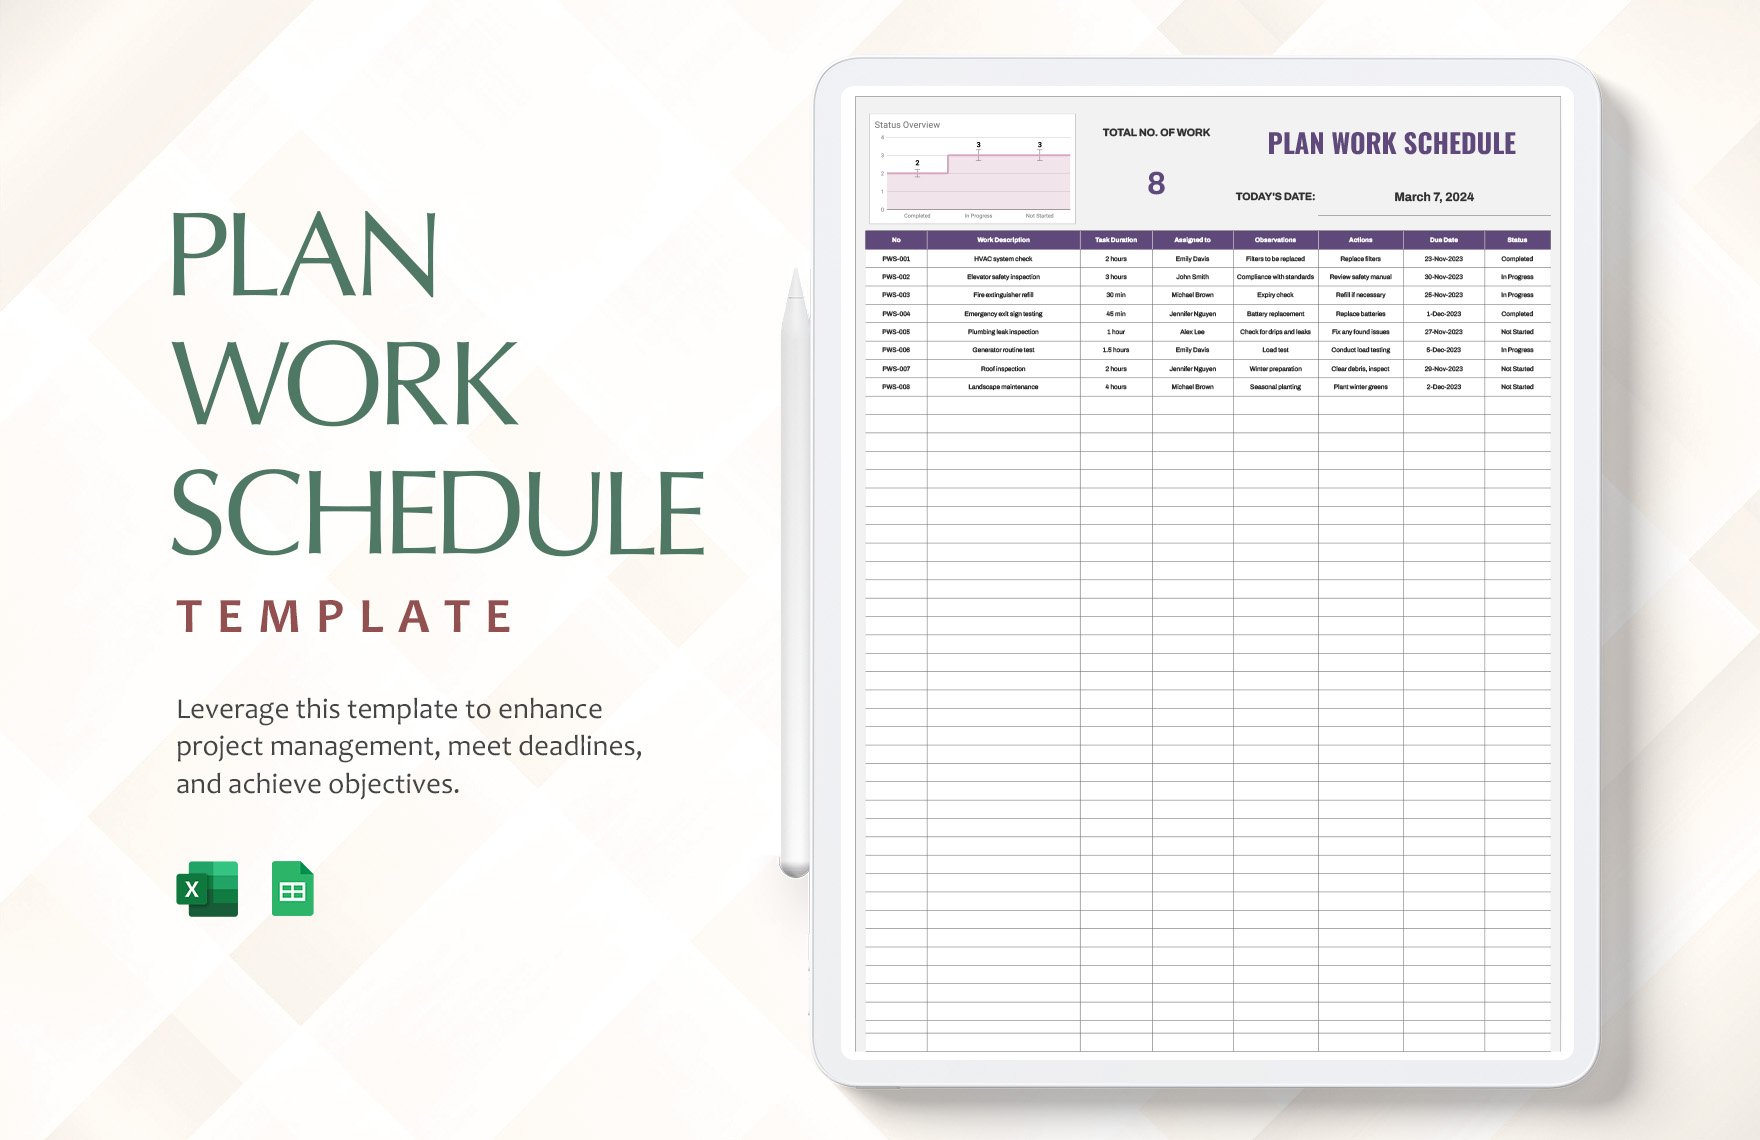 Plan Work Schedule Template in Excel, Google Sheets